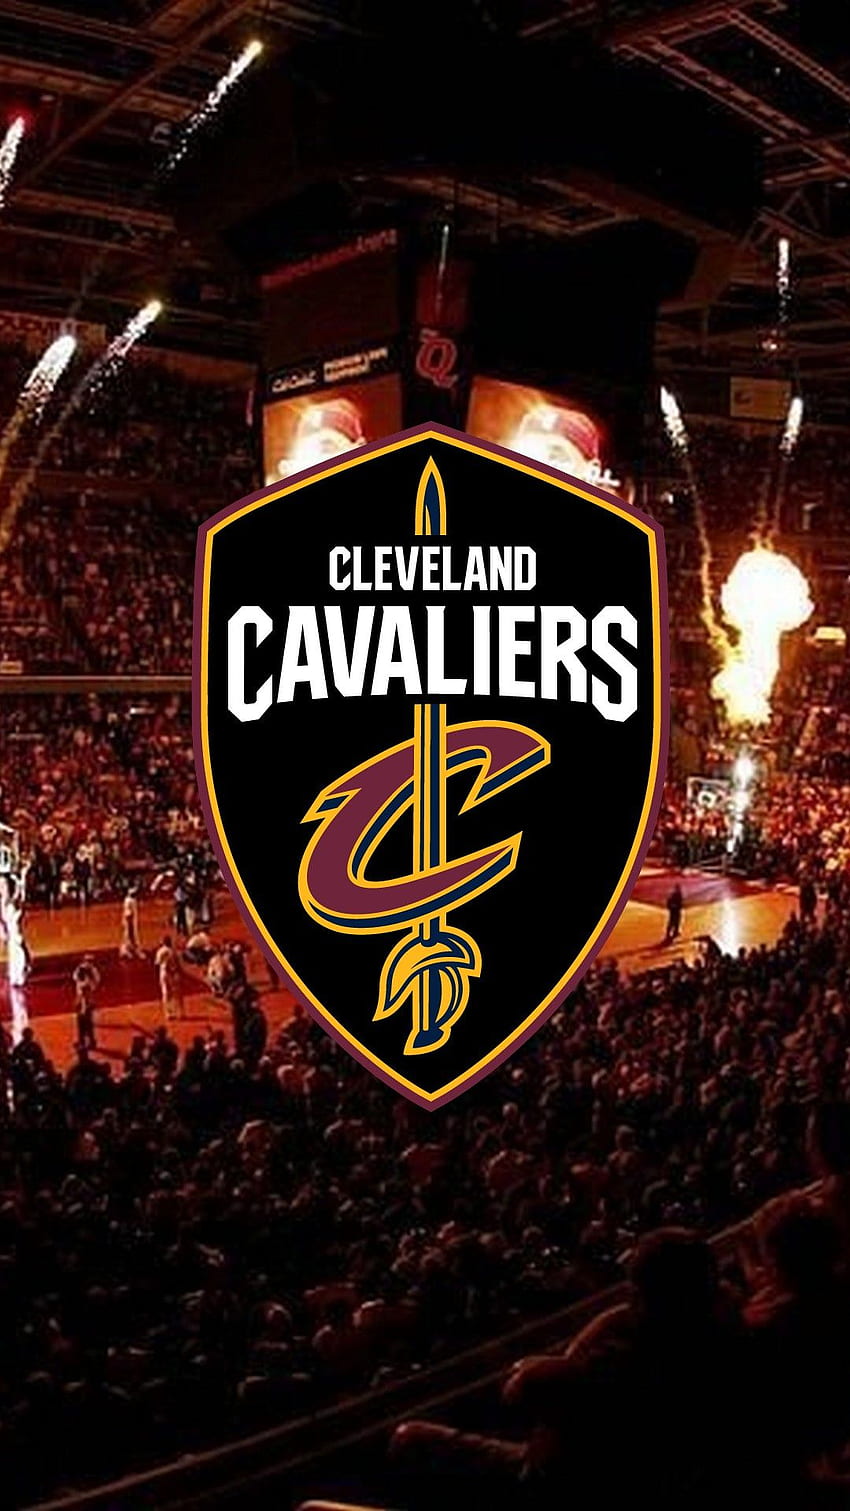 Seluler Cleveland Cavaliers. Bola Basket 2020 wallpaper ponsel HD